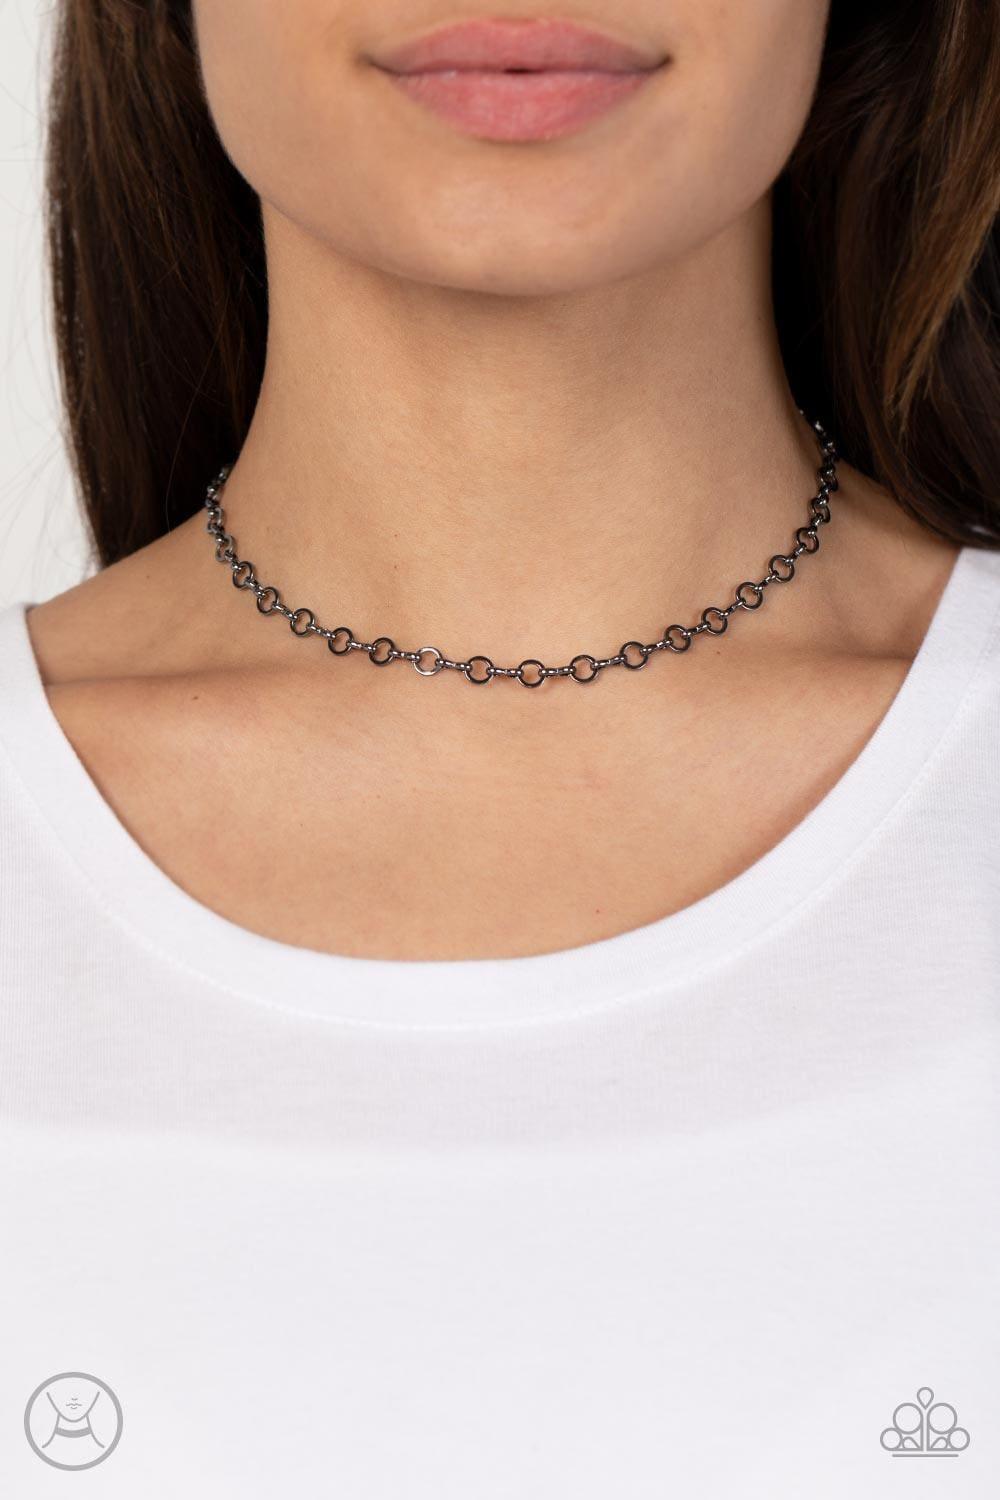 Paparazzi Accessories - Keepin It Chic - Black Choker Necklace - Bling by JessieK